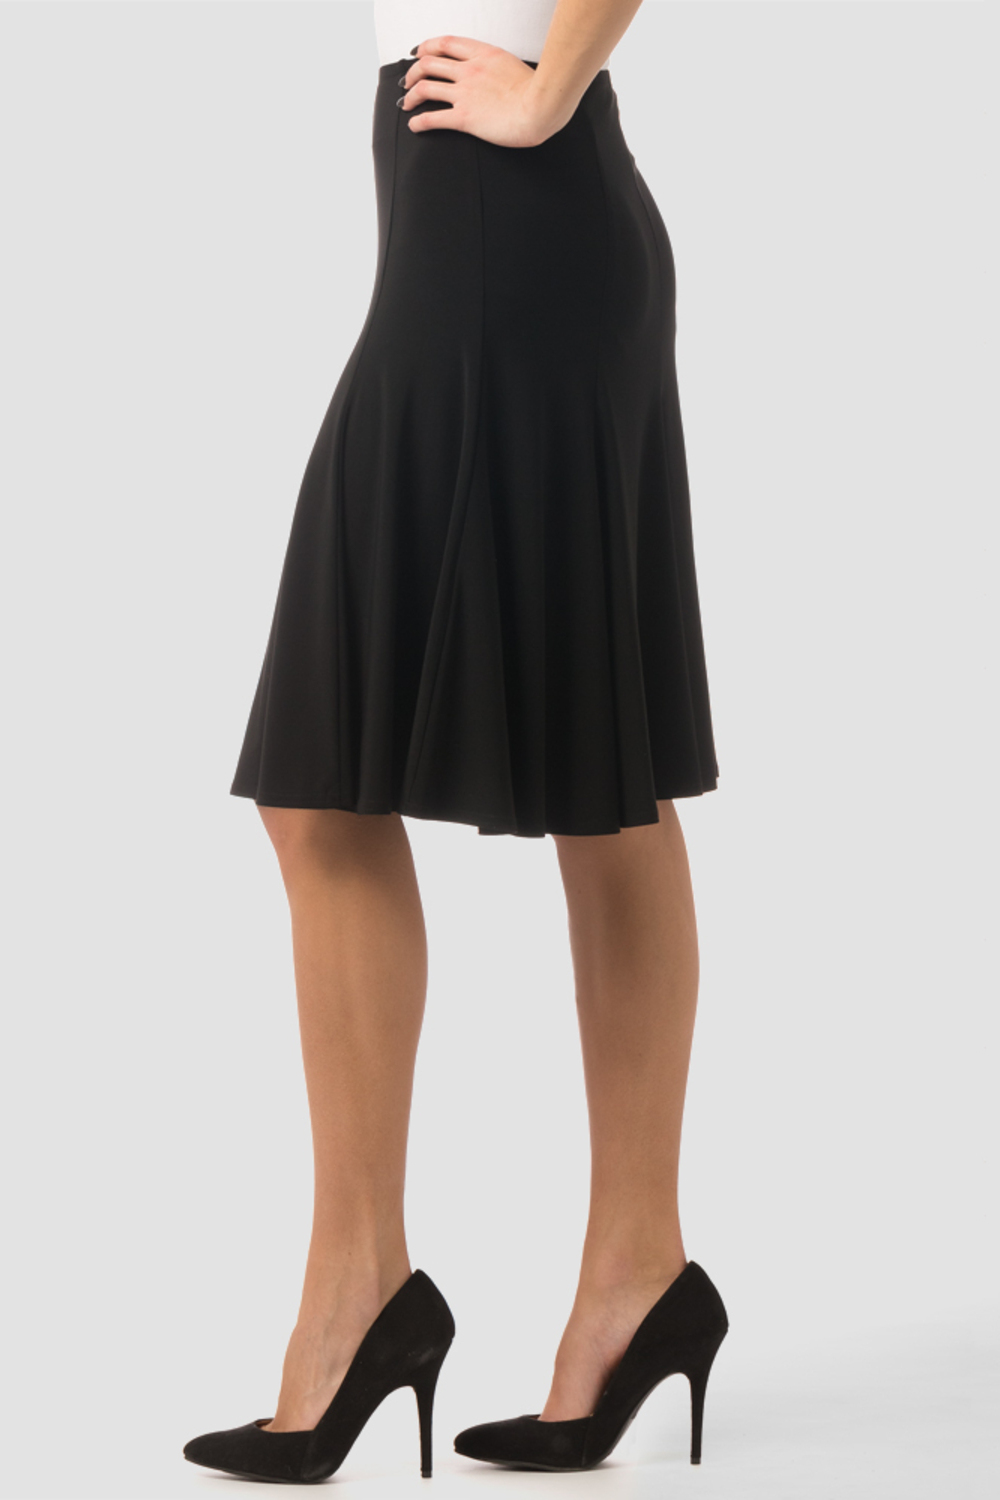 Joseph Ribkoff skirt style 70493. Black